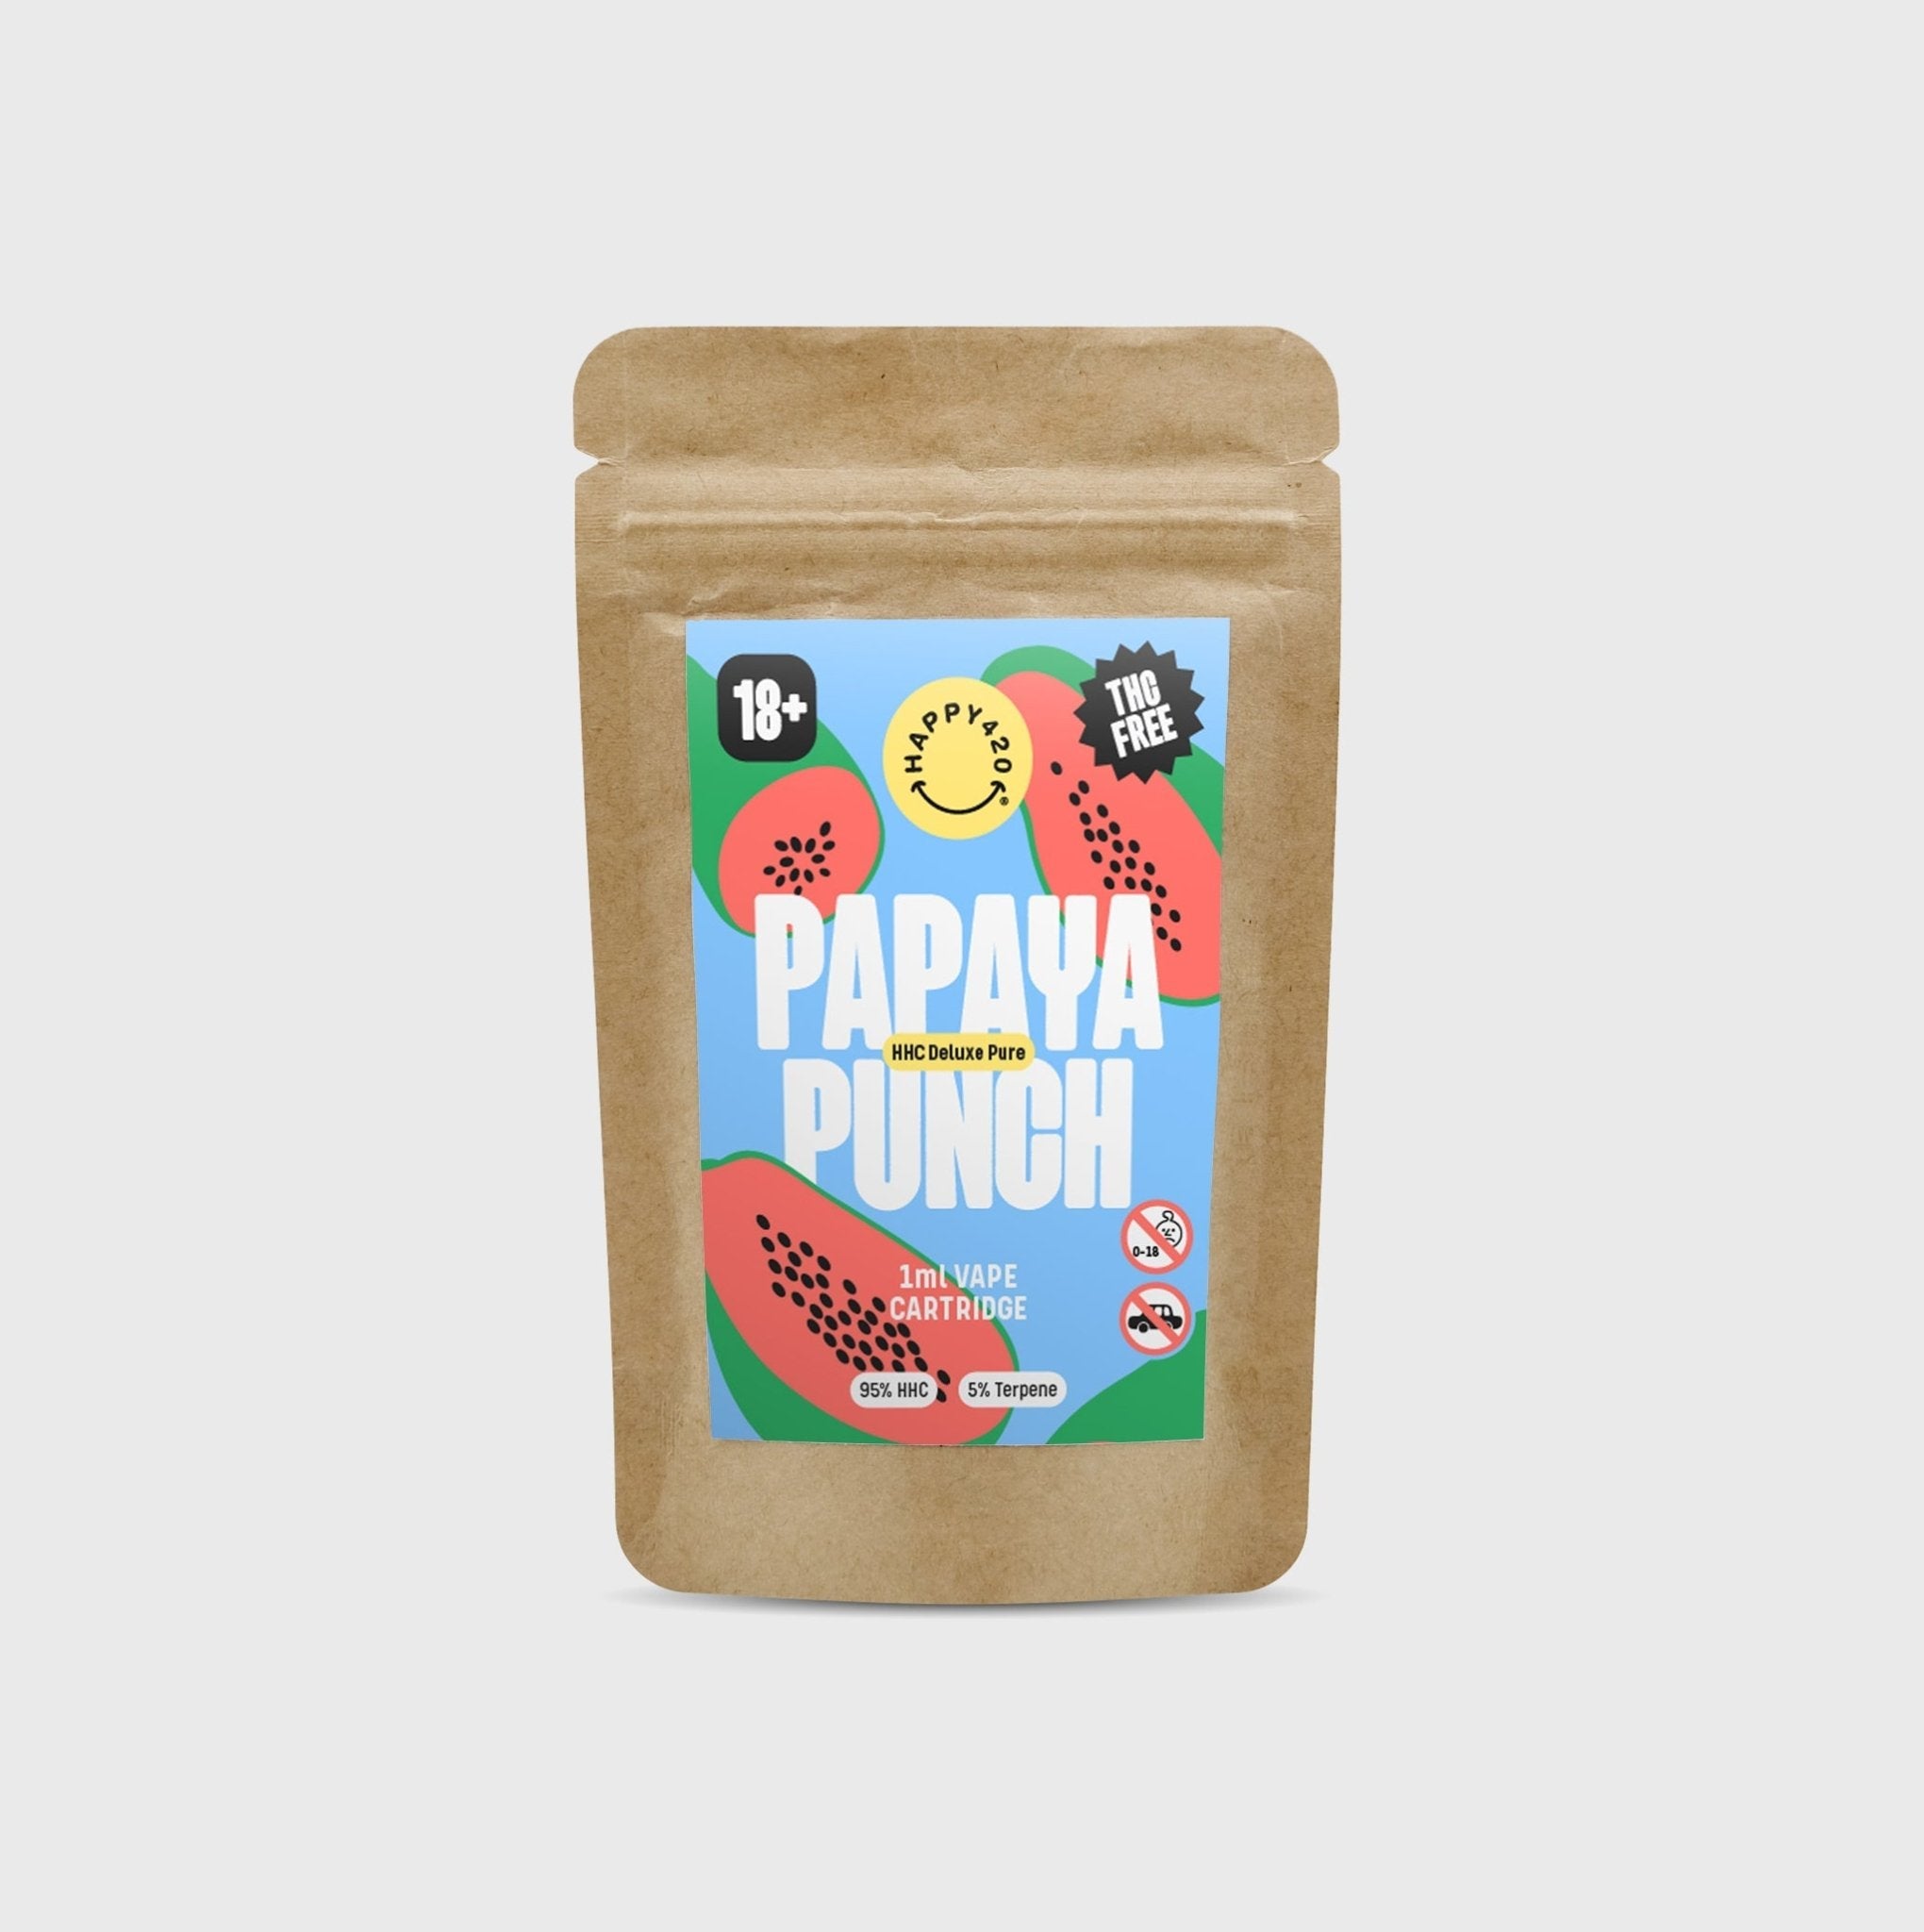 NEU! HHC Deluxe Pure Papaya Punch - 95% HHC - Happy420.de